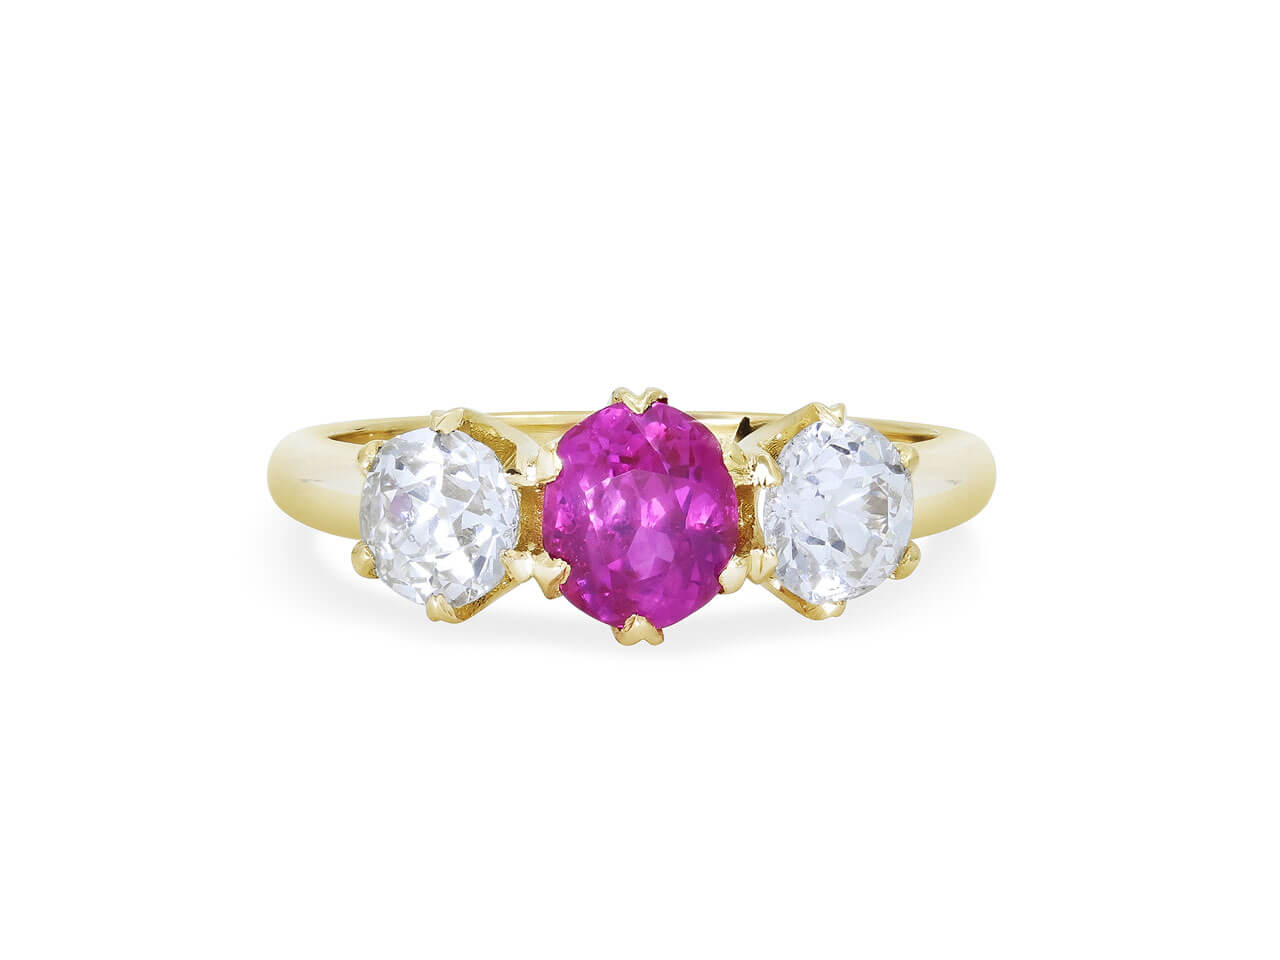 Beladora 'Bespoke' Three Stone Pink Sapphire and Diamond Ring in 14K Gold